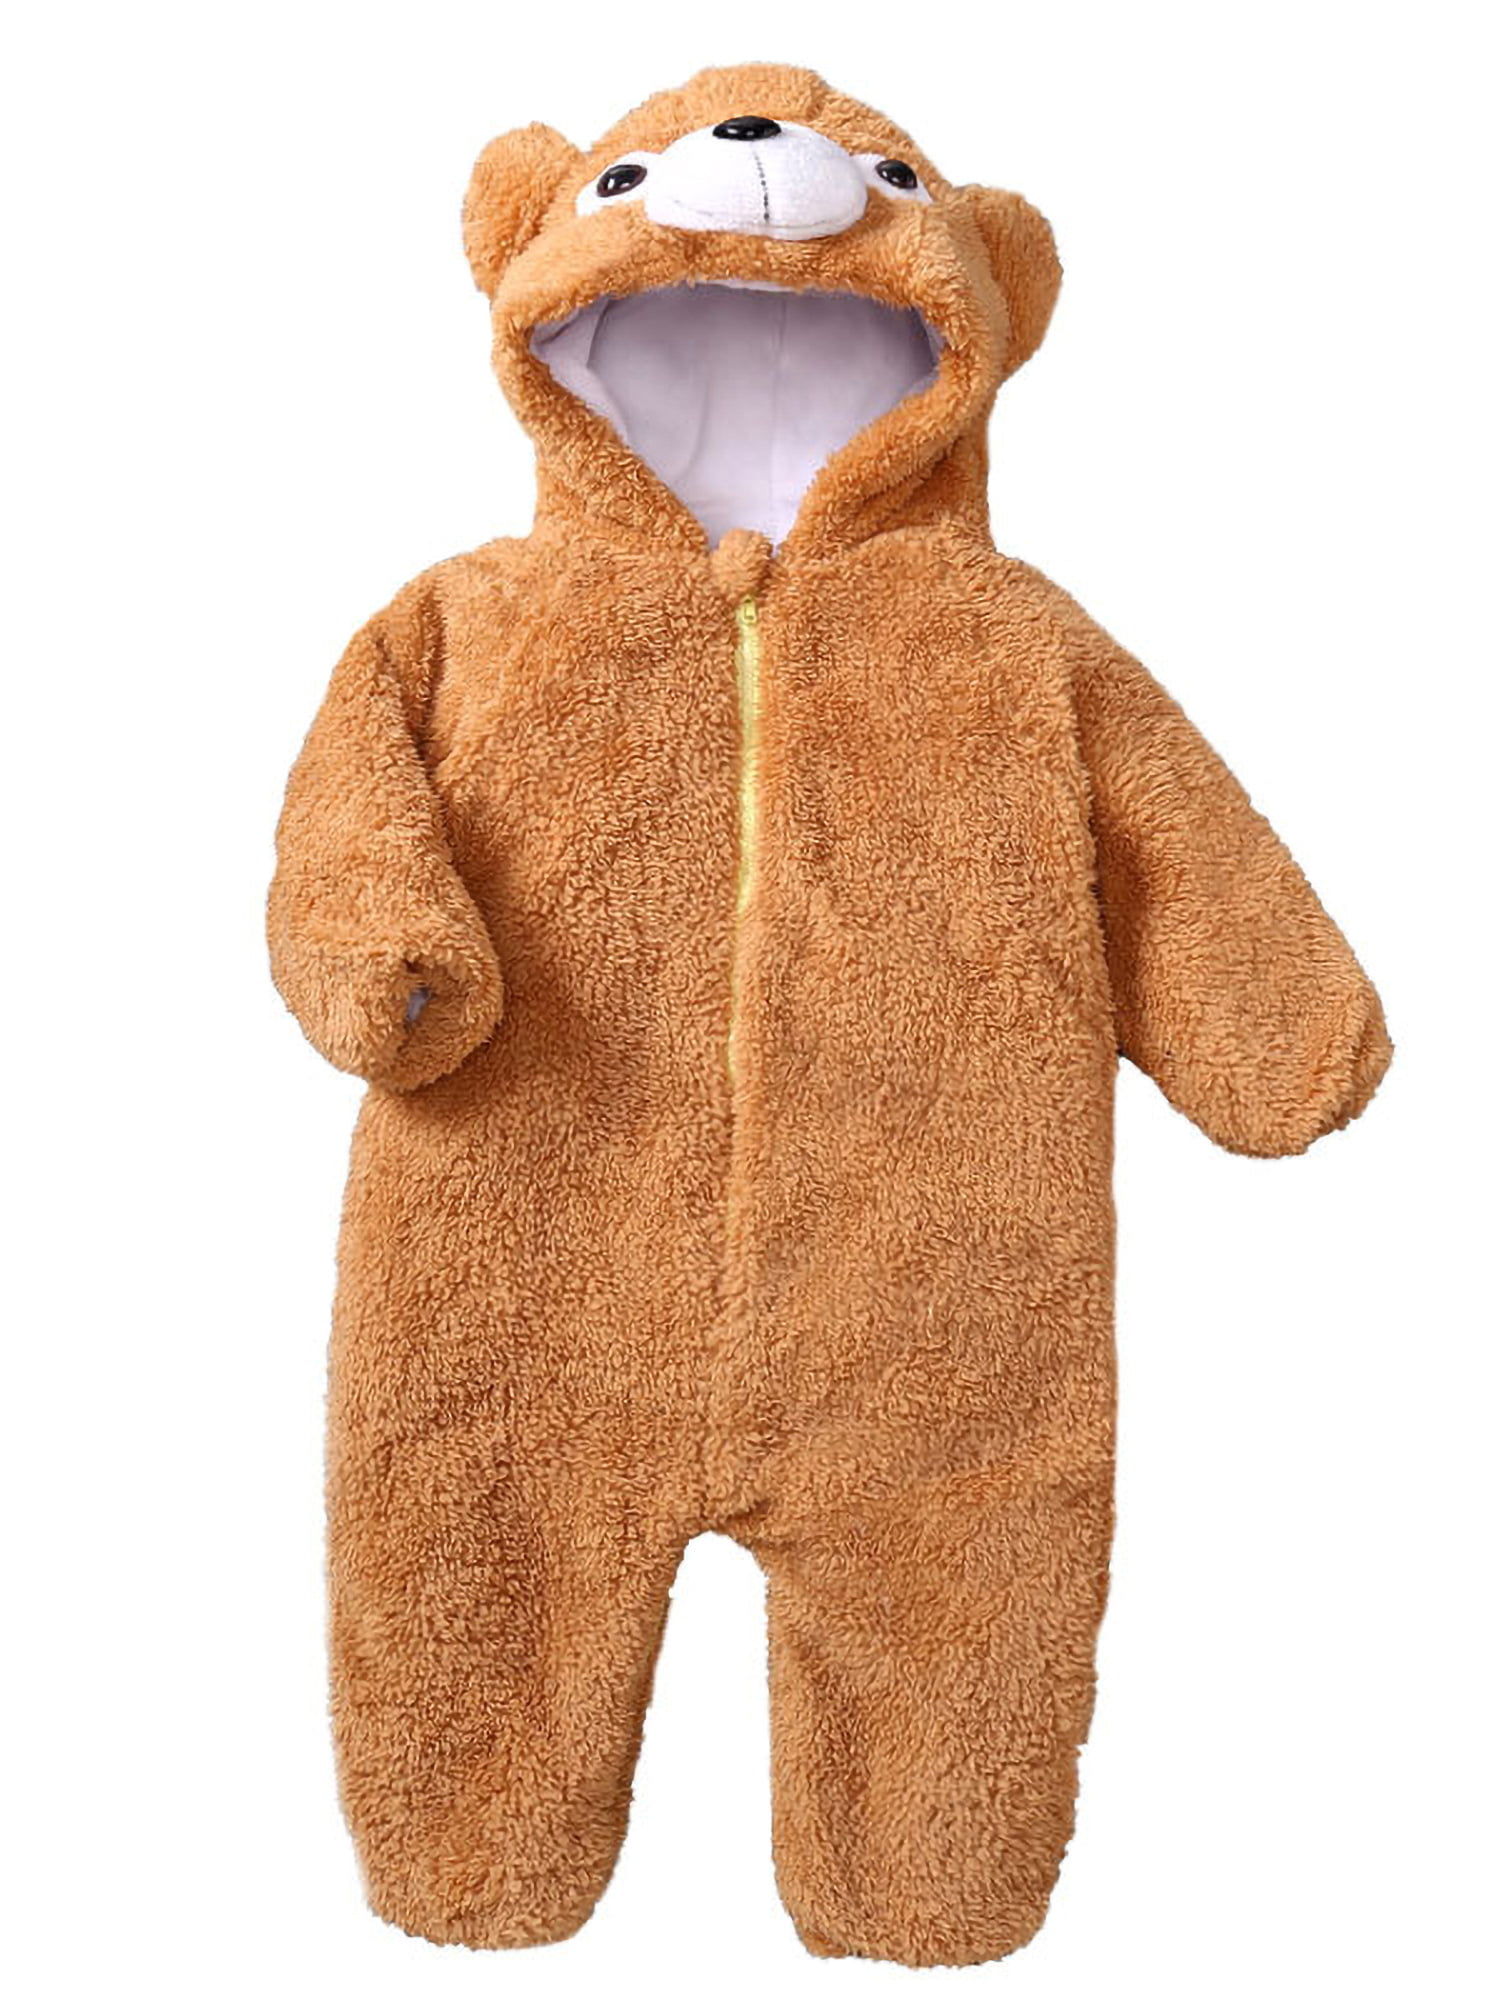 KONFA Toddler Kids Newborn Baby Girls Boys Rompers Winter Warm Clothes,Cartoon Bear Fluffy Hooded Jumpsuit Set 